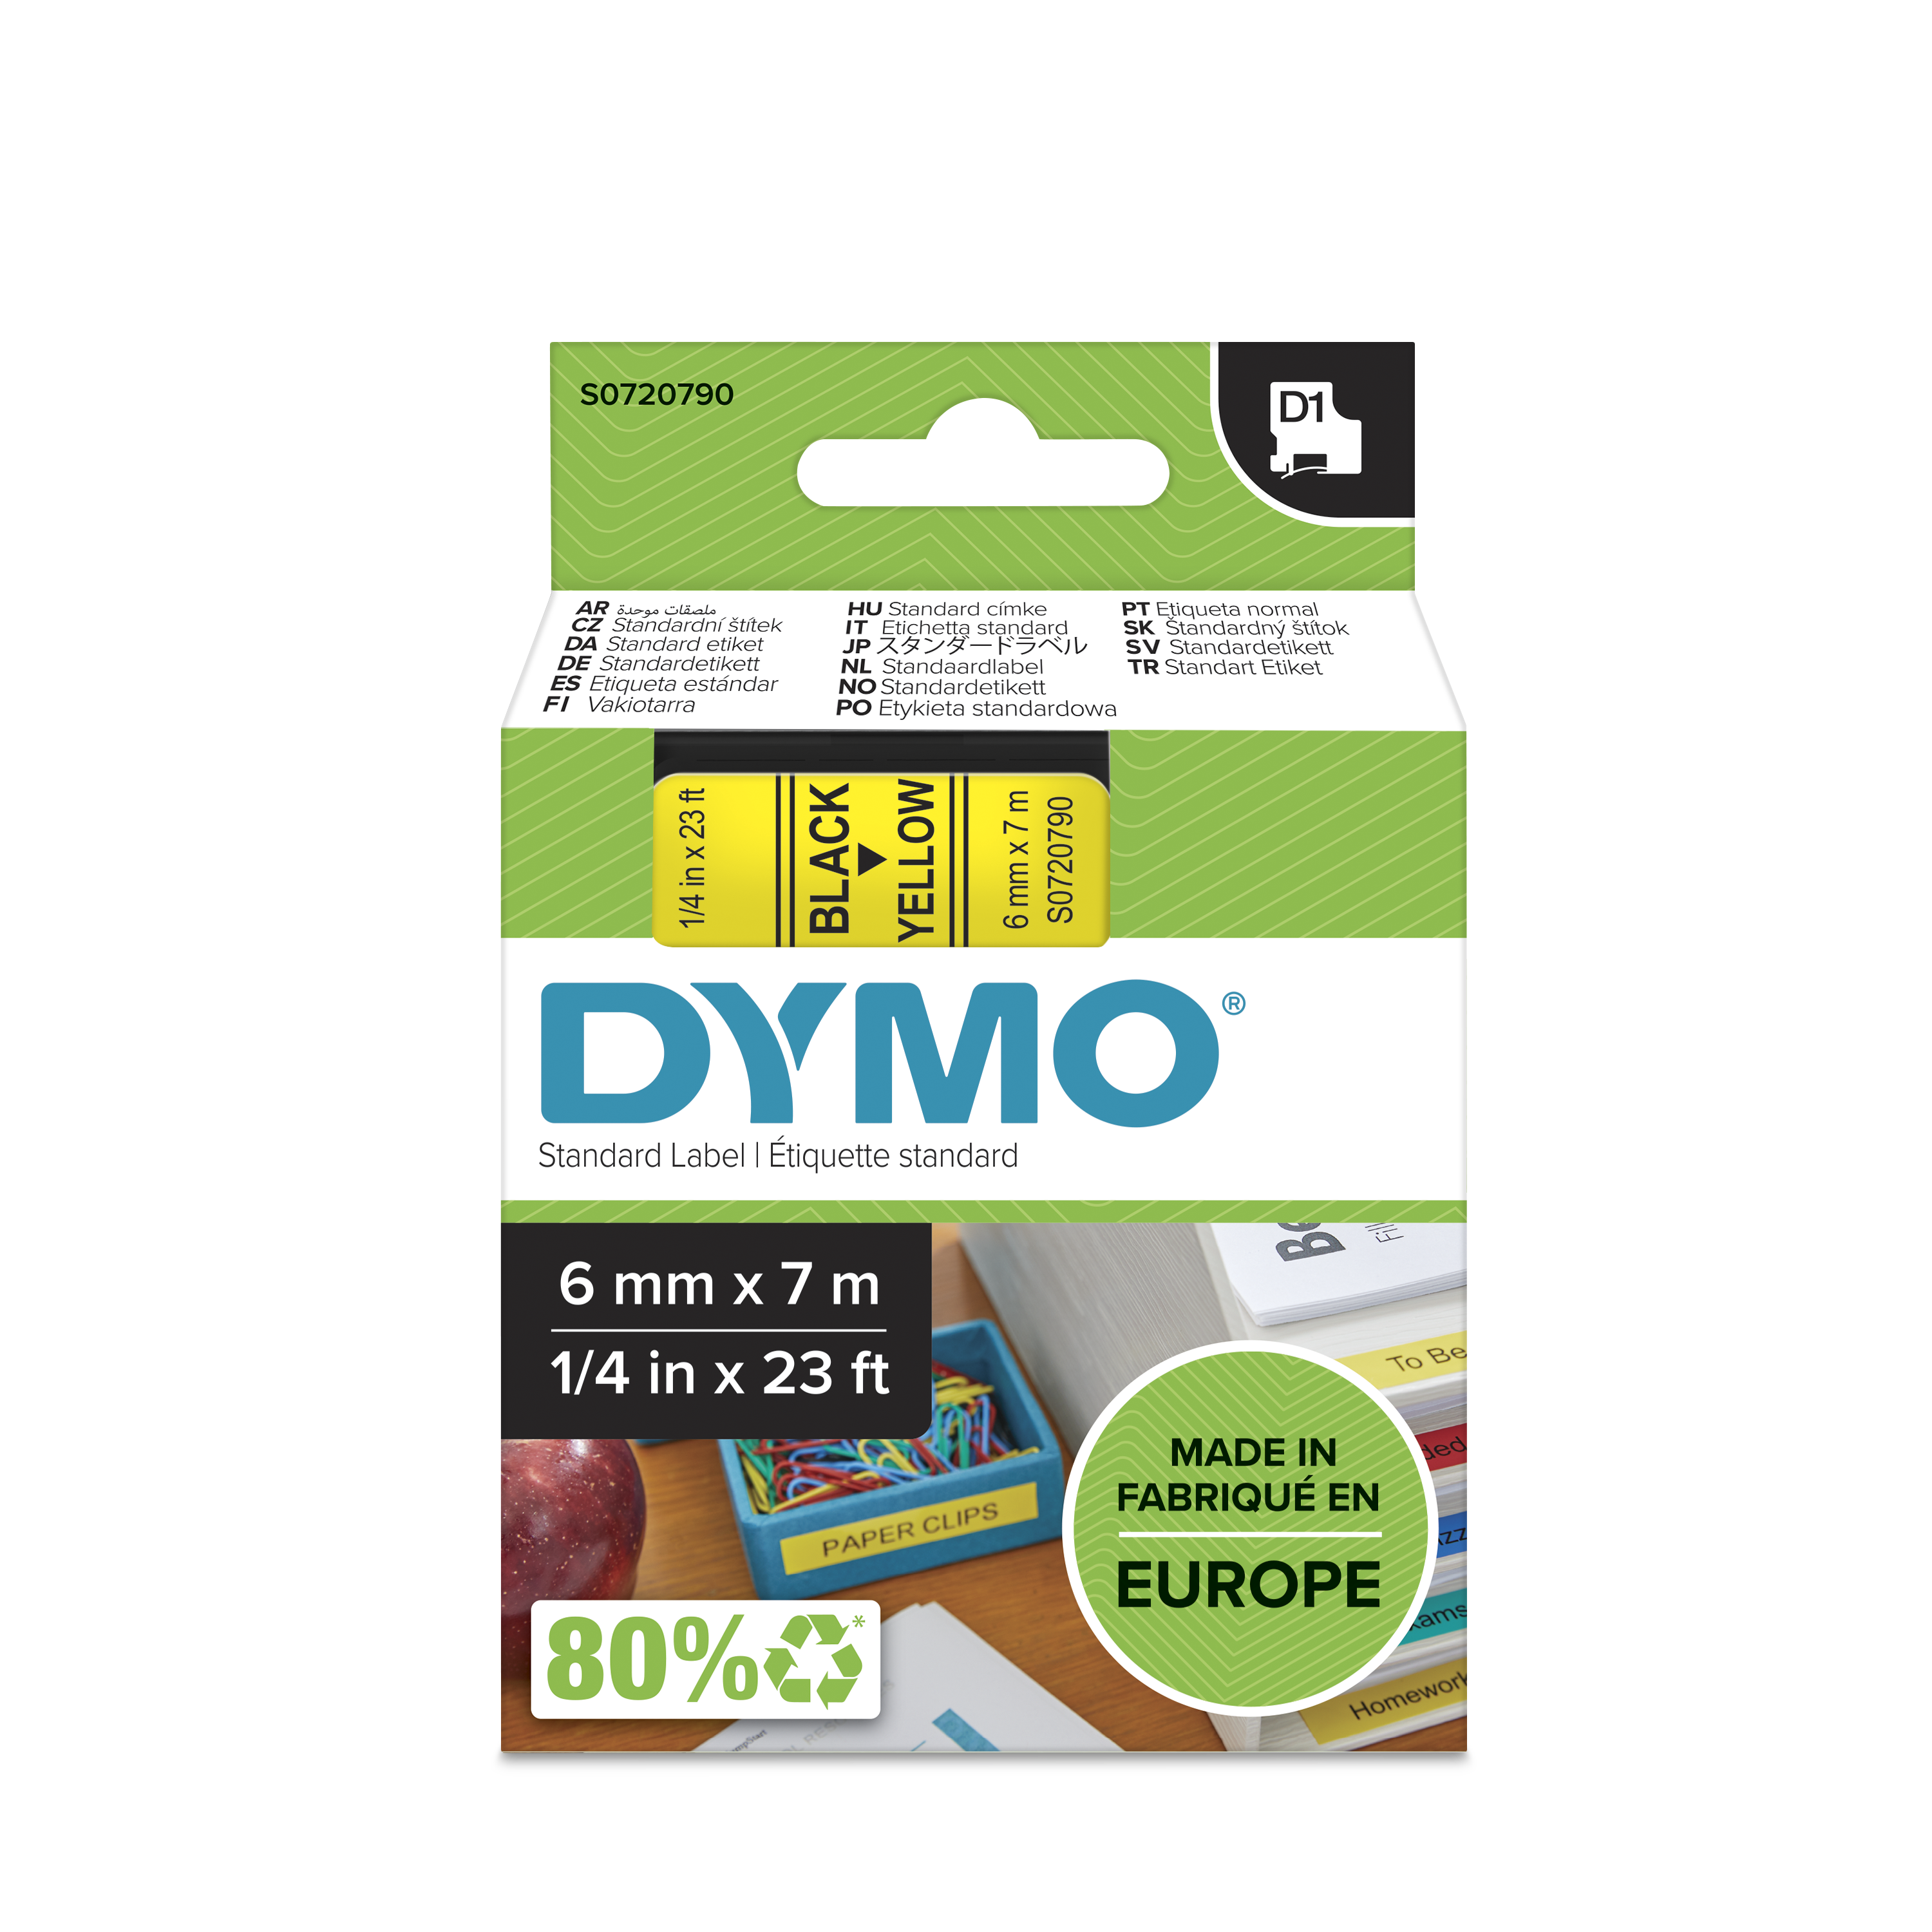 Dymo Black on Yellow Label Printer Tape, 7 m Length, 6 mm Width